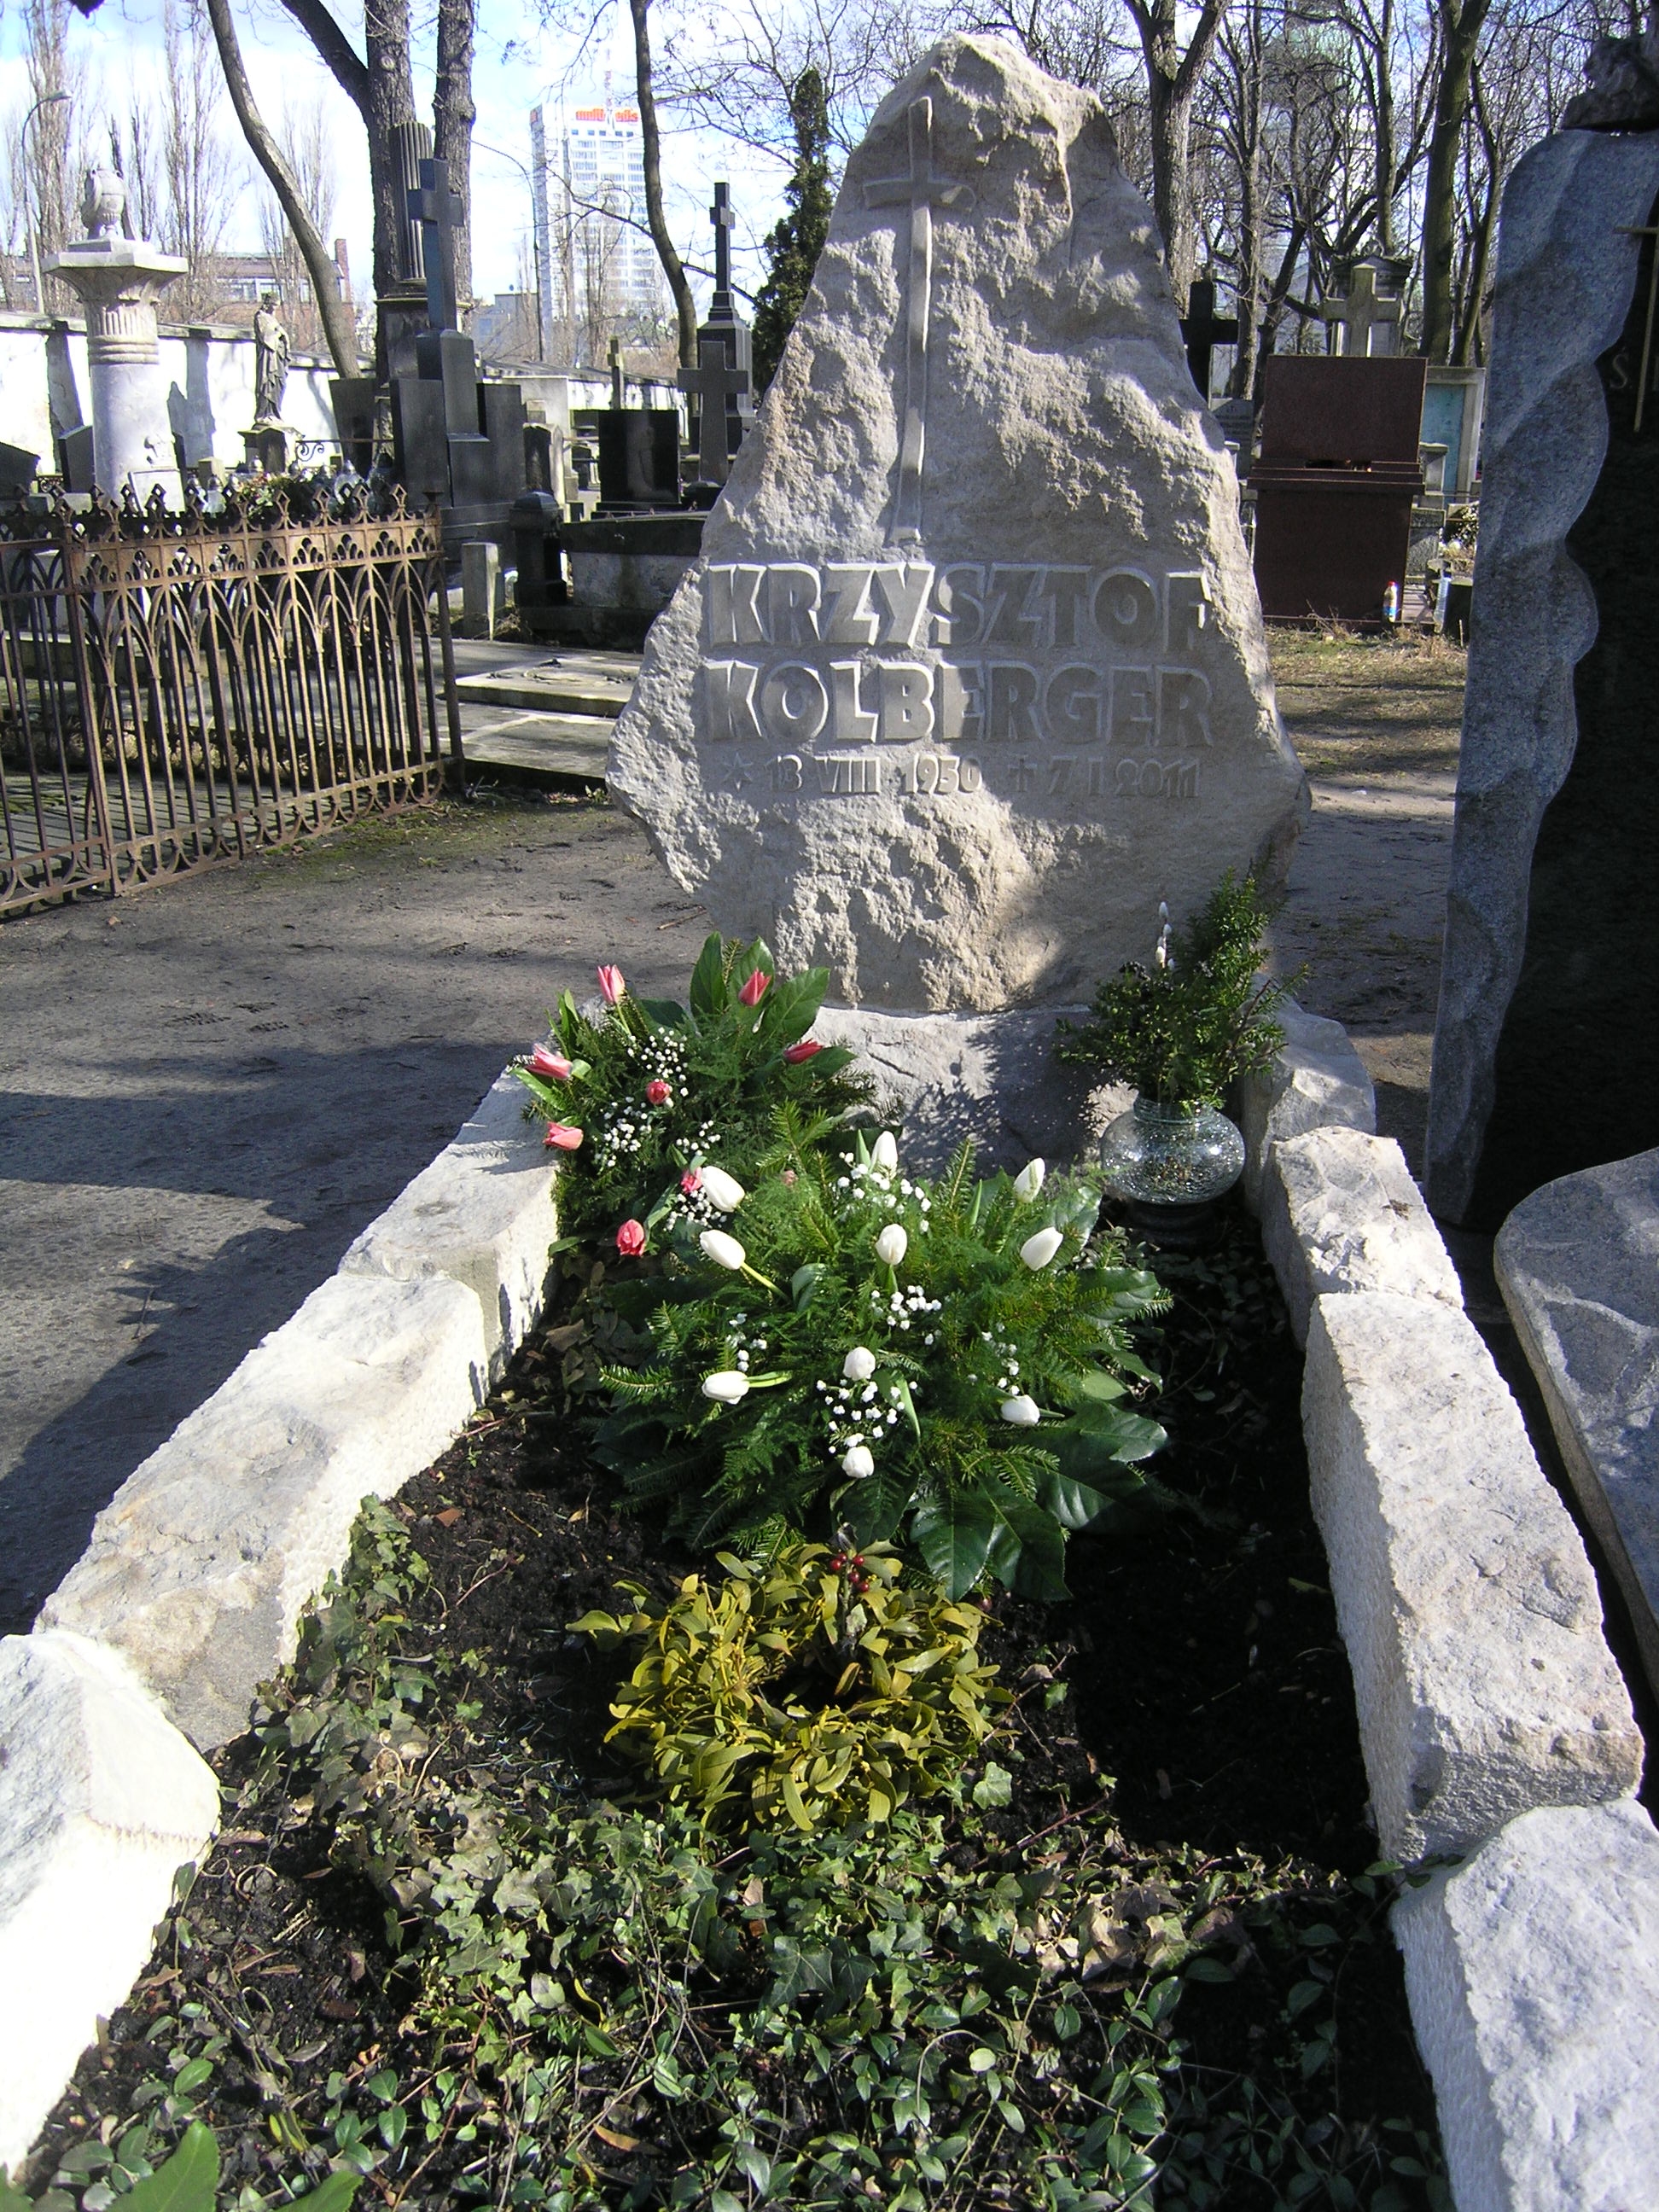 Wikipedia, Krzysztof Kolberger, Powzki Cemetery - K, Self-published work